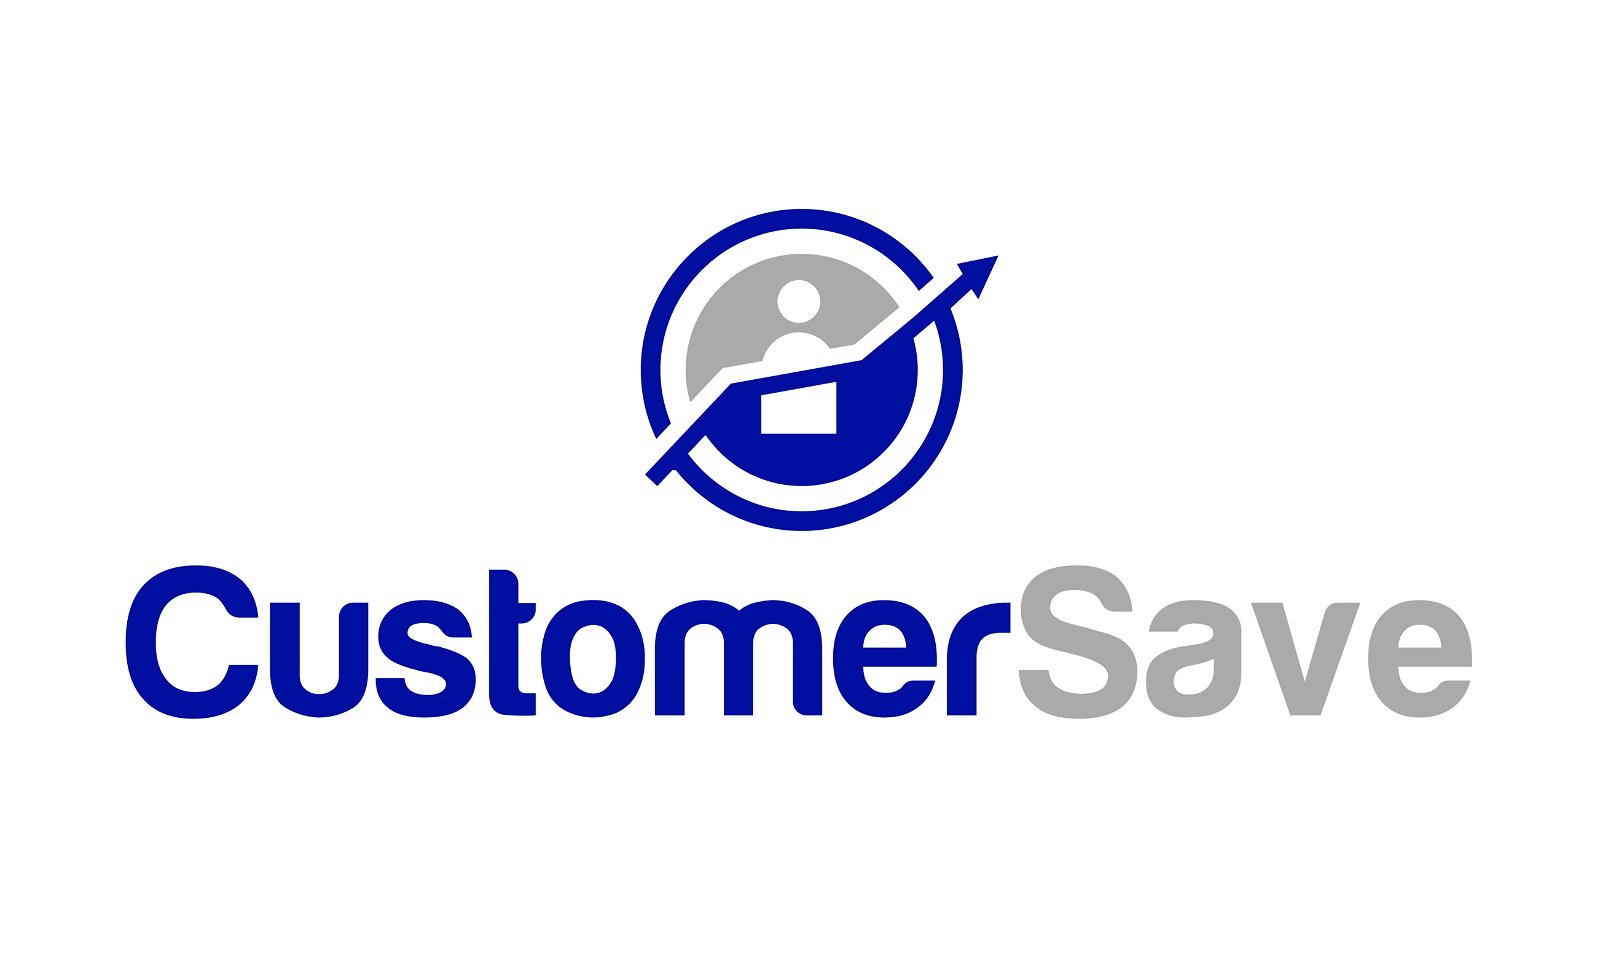 CustomerSave.com - Creative brandable domain for sale